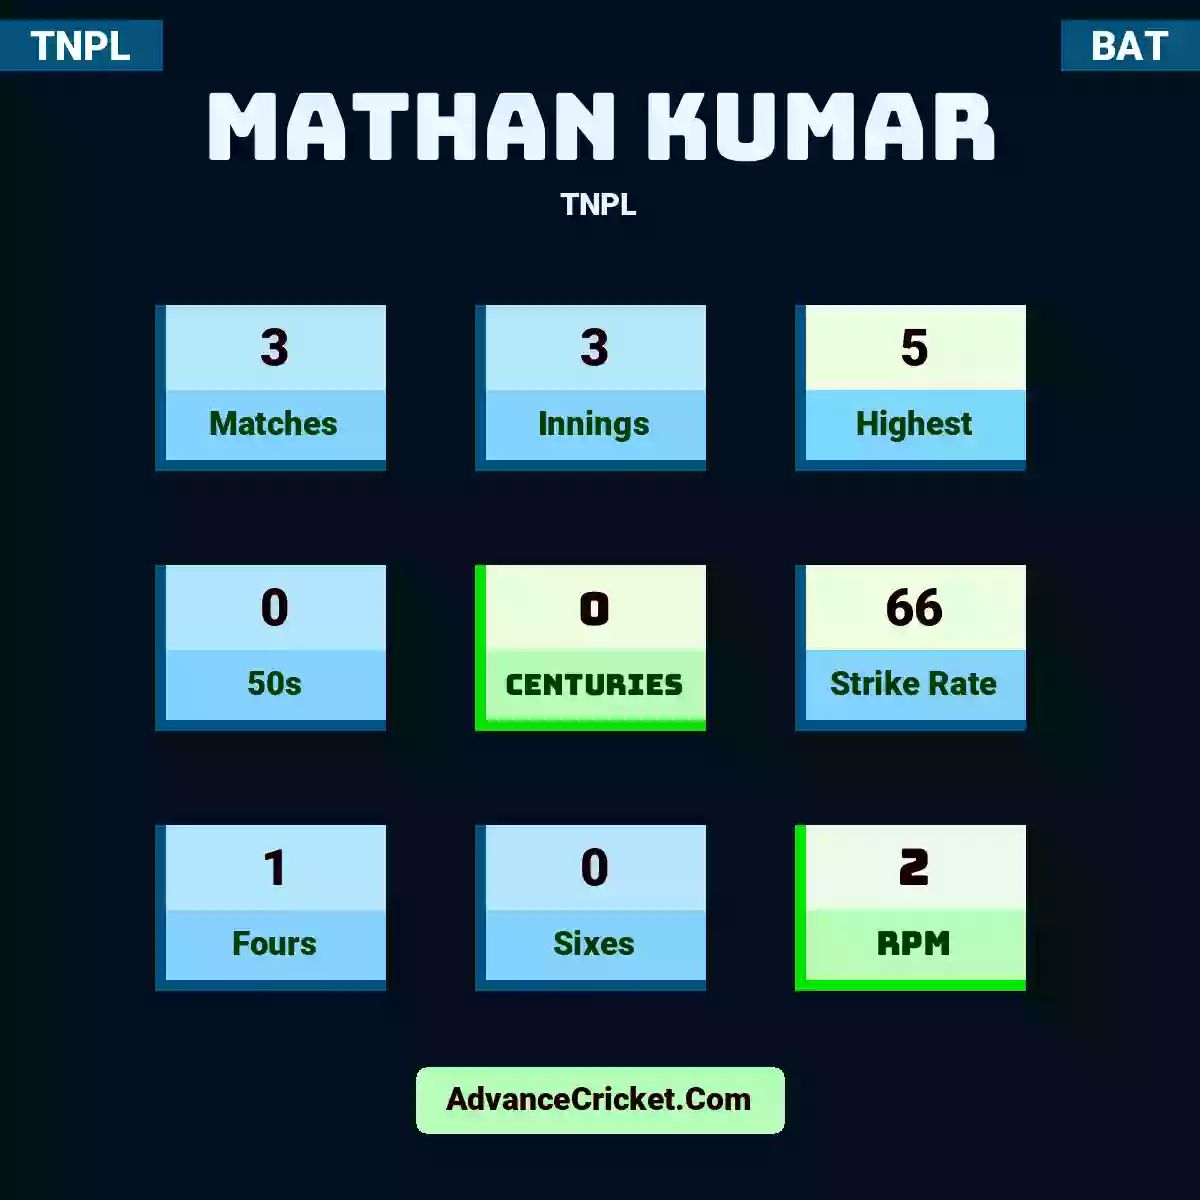 Mathan Kumar TNPL , Mathan Kumar played 3 matches, scored 5 runs as highest, 0 half-centuries, and 0 centuries, with a strike rate of 66. M.Kumar hit 1 fours and 0 sixes, with an RPM of 2.